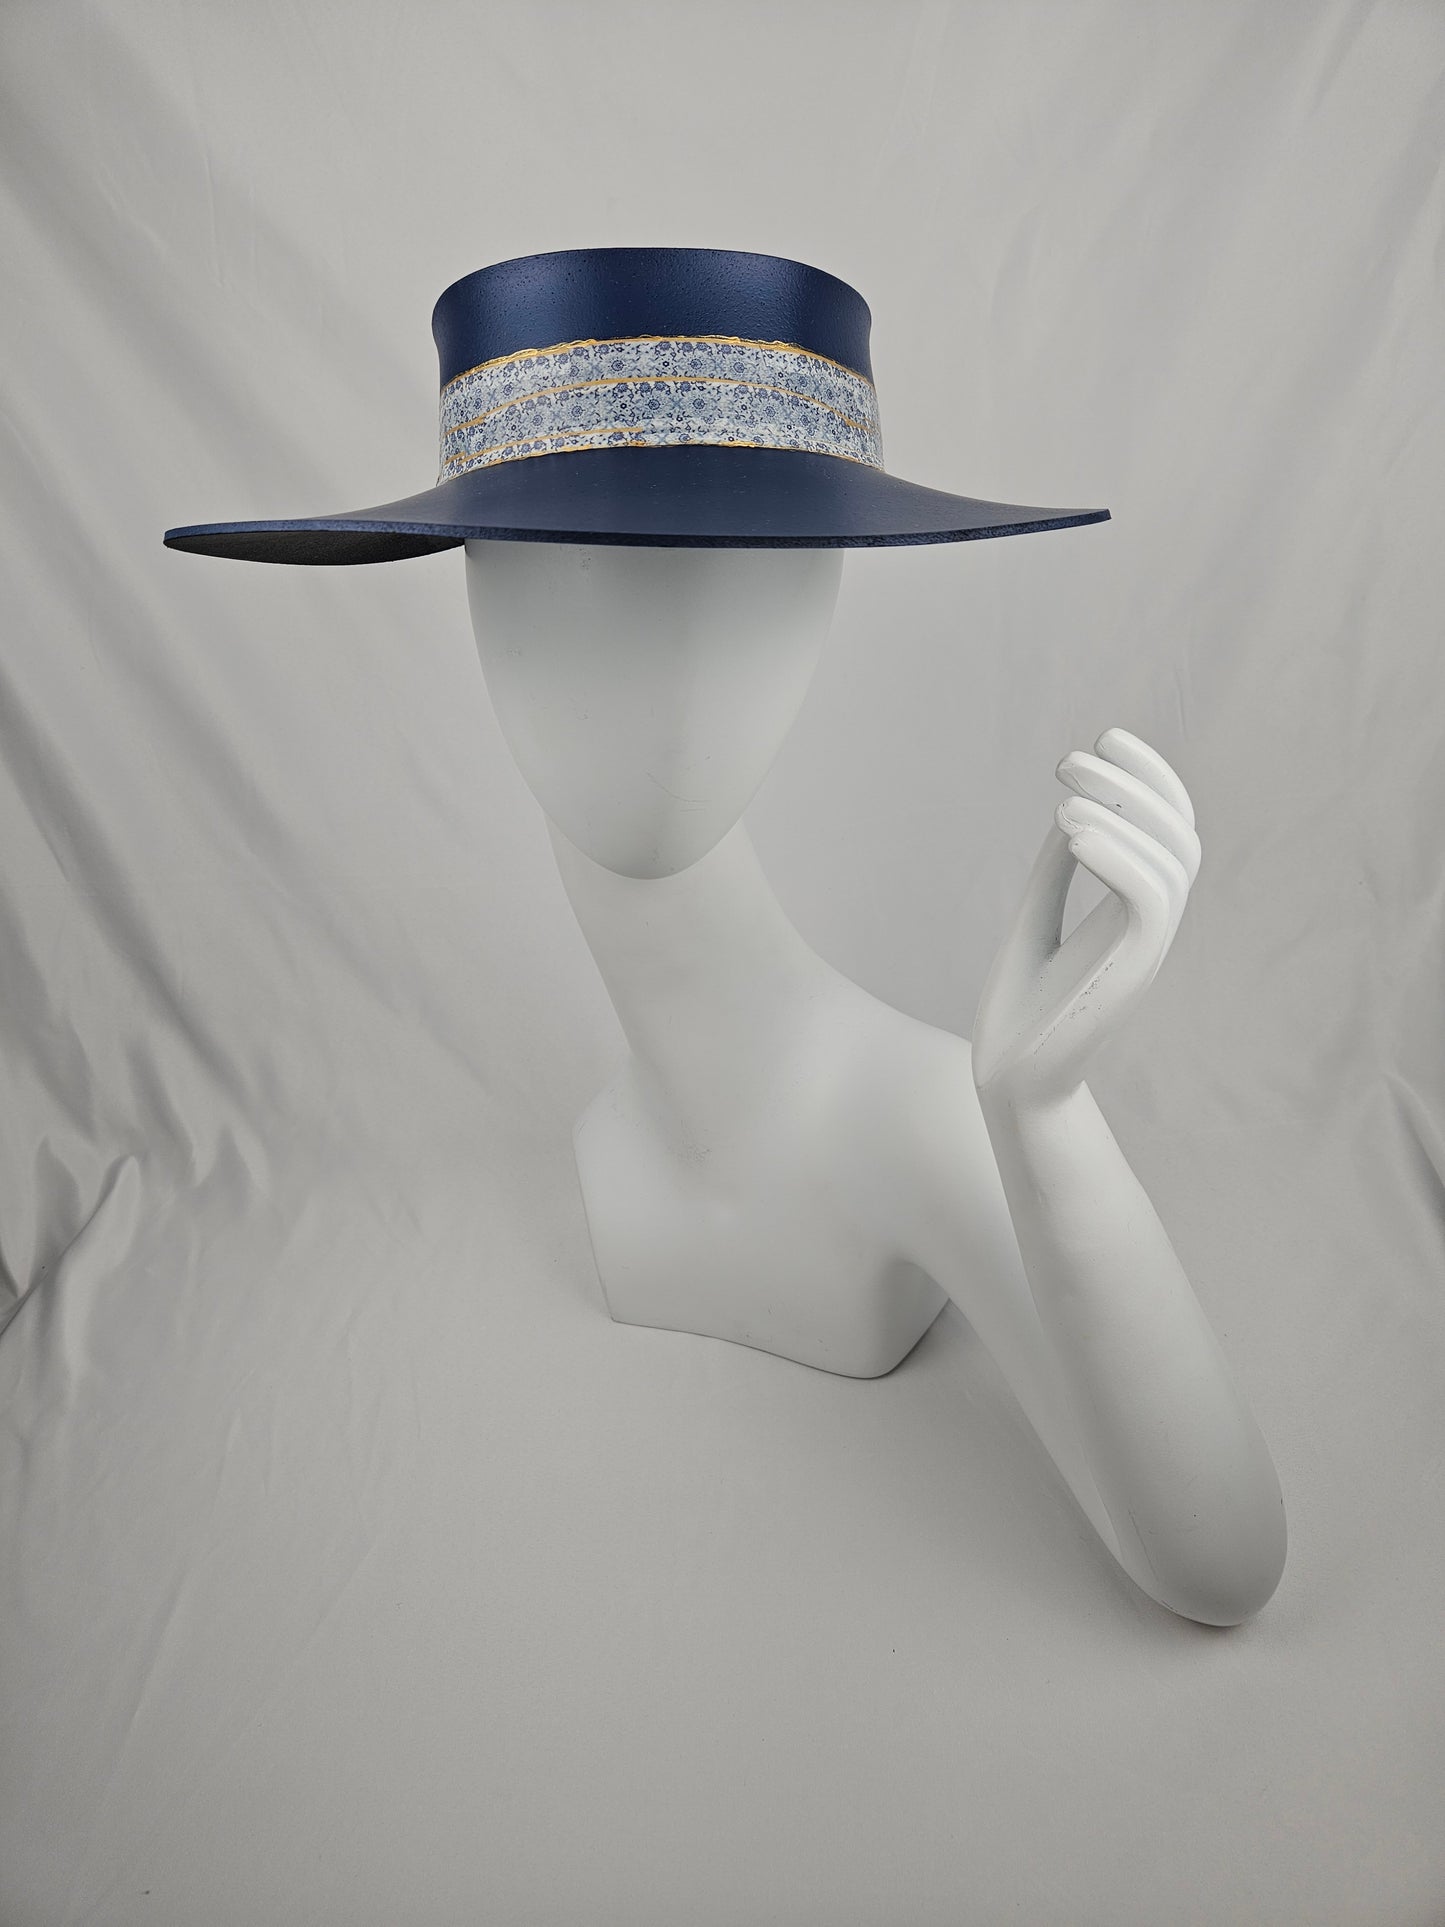 Classic Navy Audrey Foam Sun Visor Hat with Blue and Gold Geometric Band: Big Brim, Golf, Swim, UV Resistant, No Headache